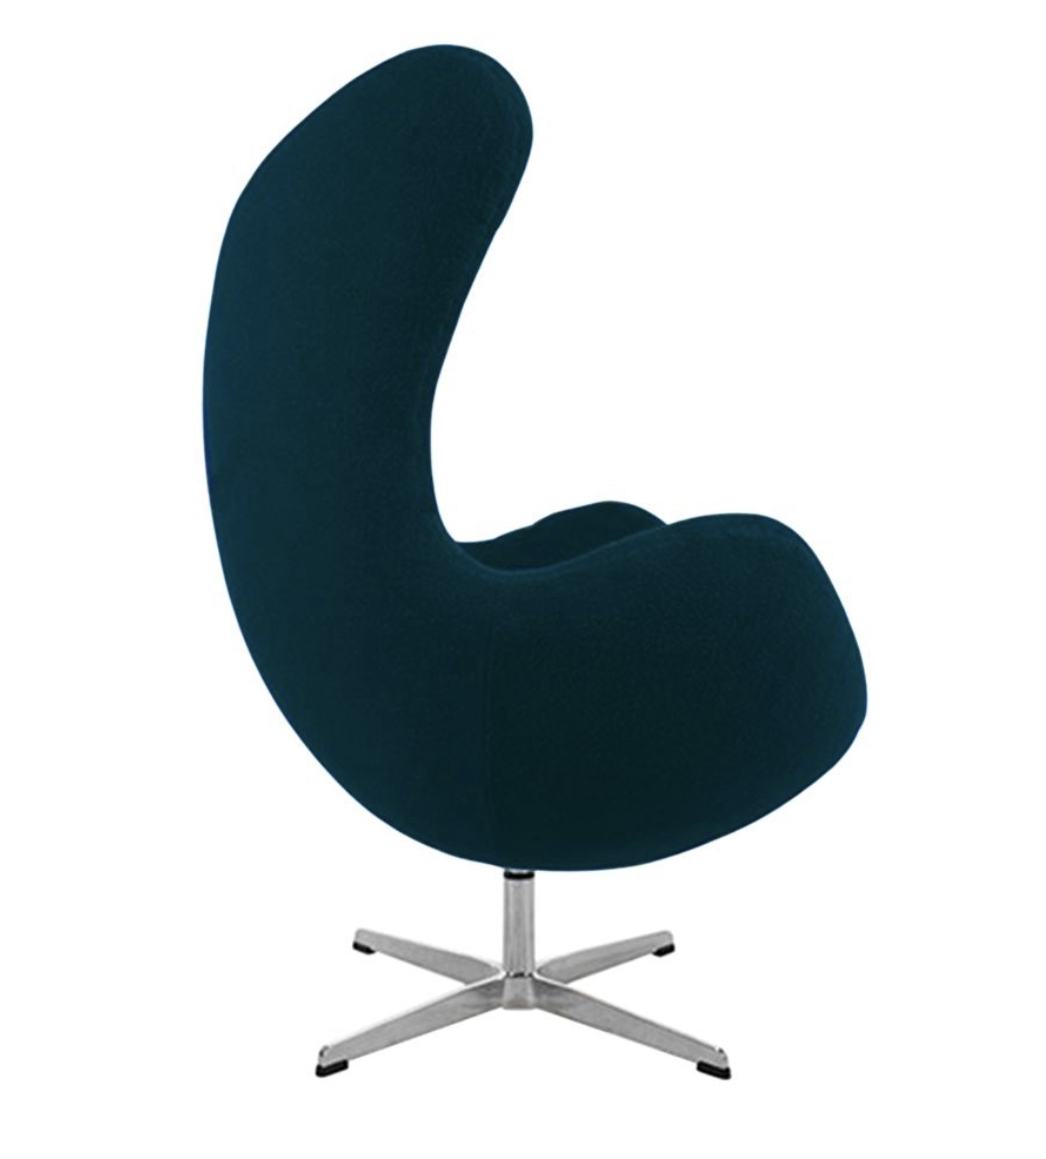 Arne Jacobsen Style Egg Chair Leather Black